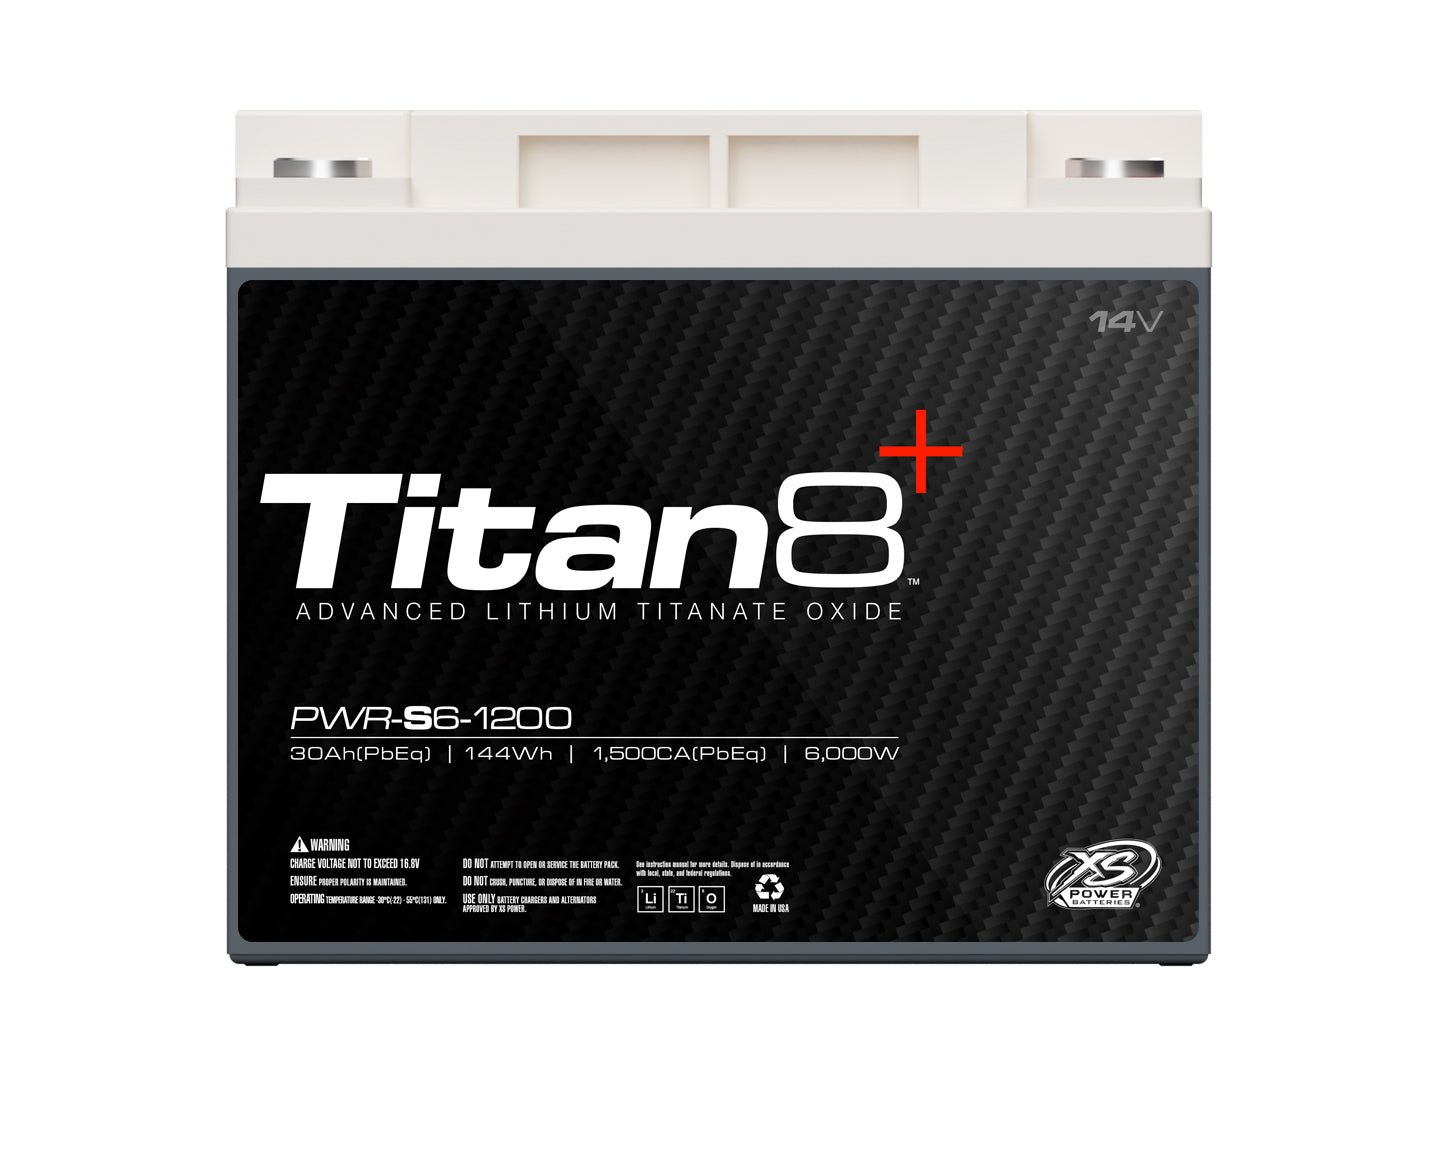 PWR-S6-1200 XS Power Titan8 14VDC Lithium LTO Car Audio Vehicle Battery 5000W 144Wh